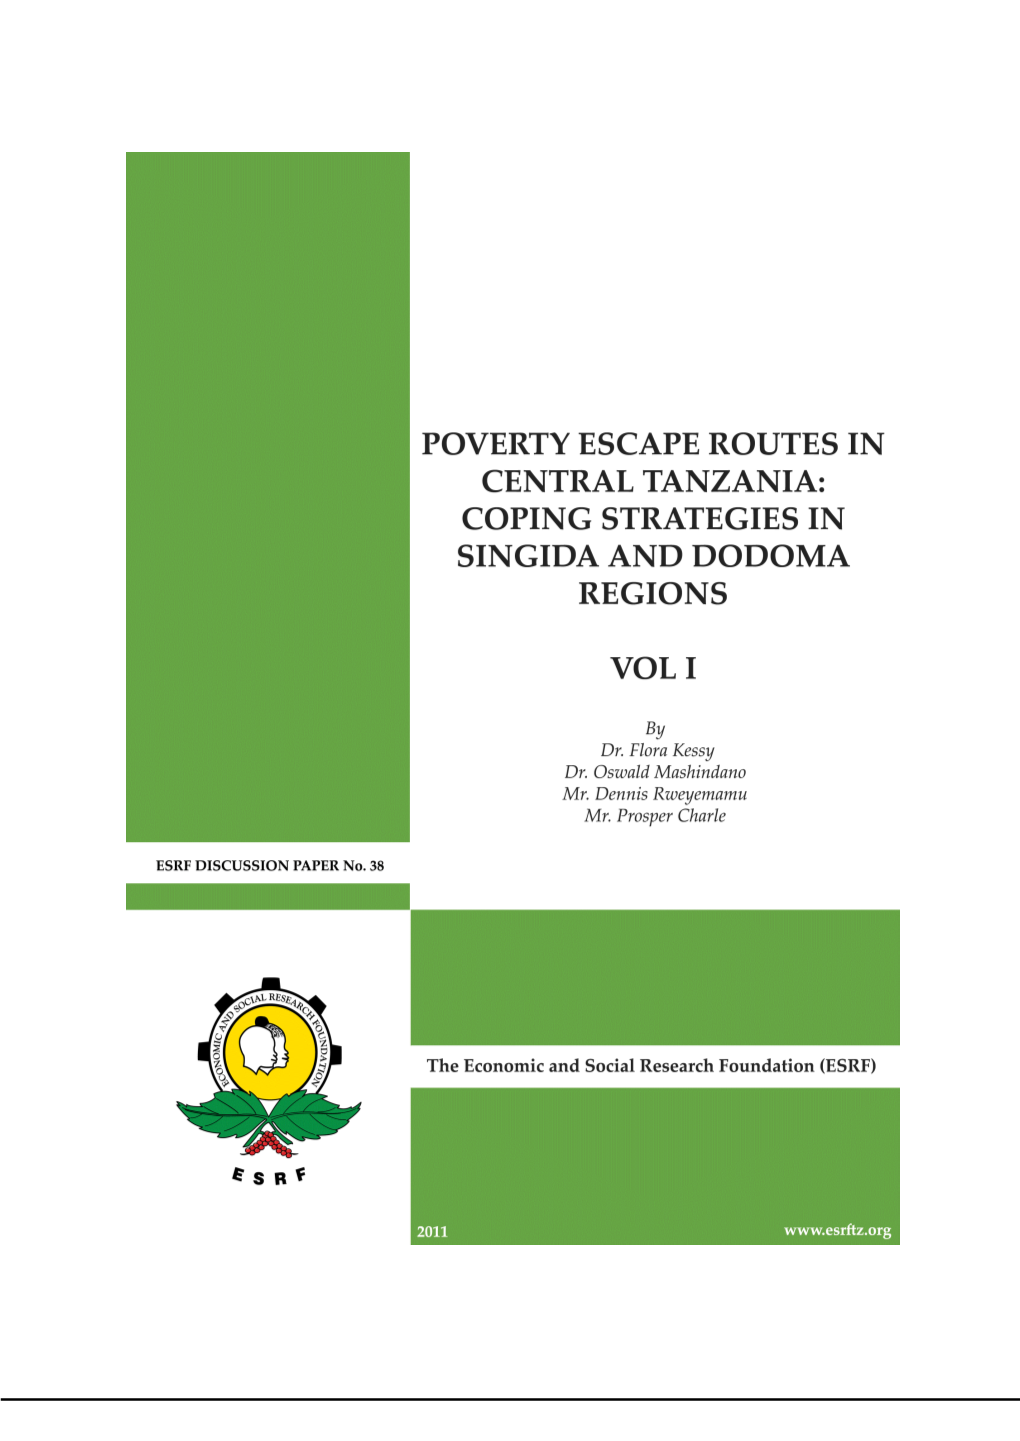 Coping Strategies in Singida and Dodoma Regions Vol I